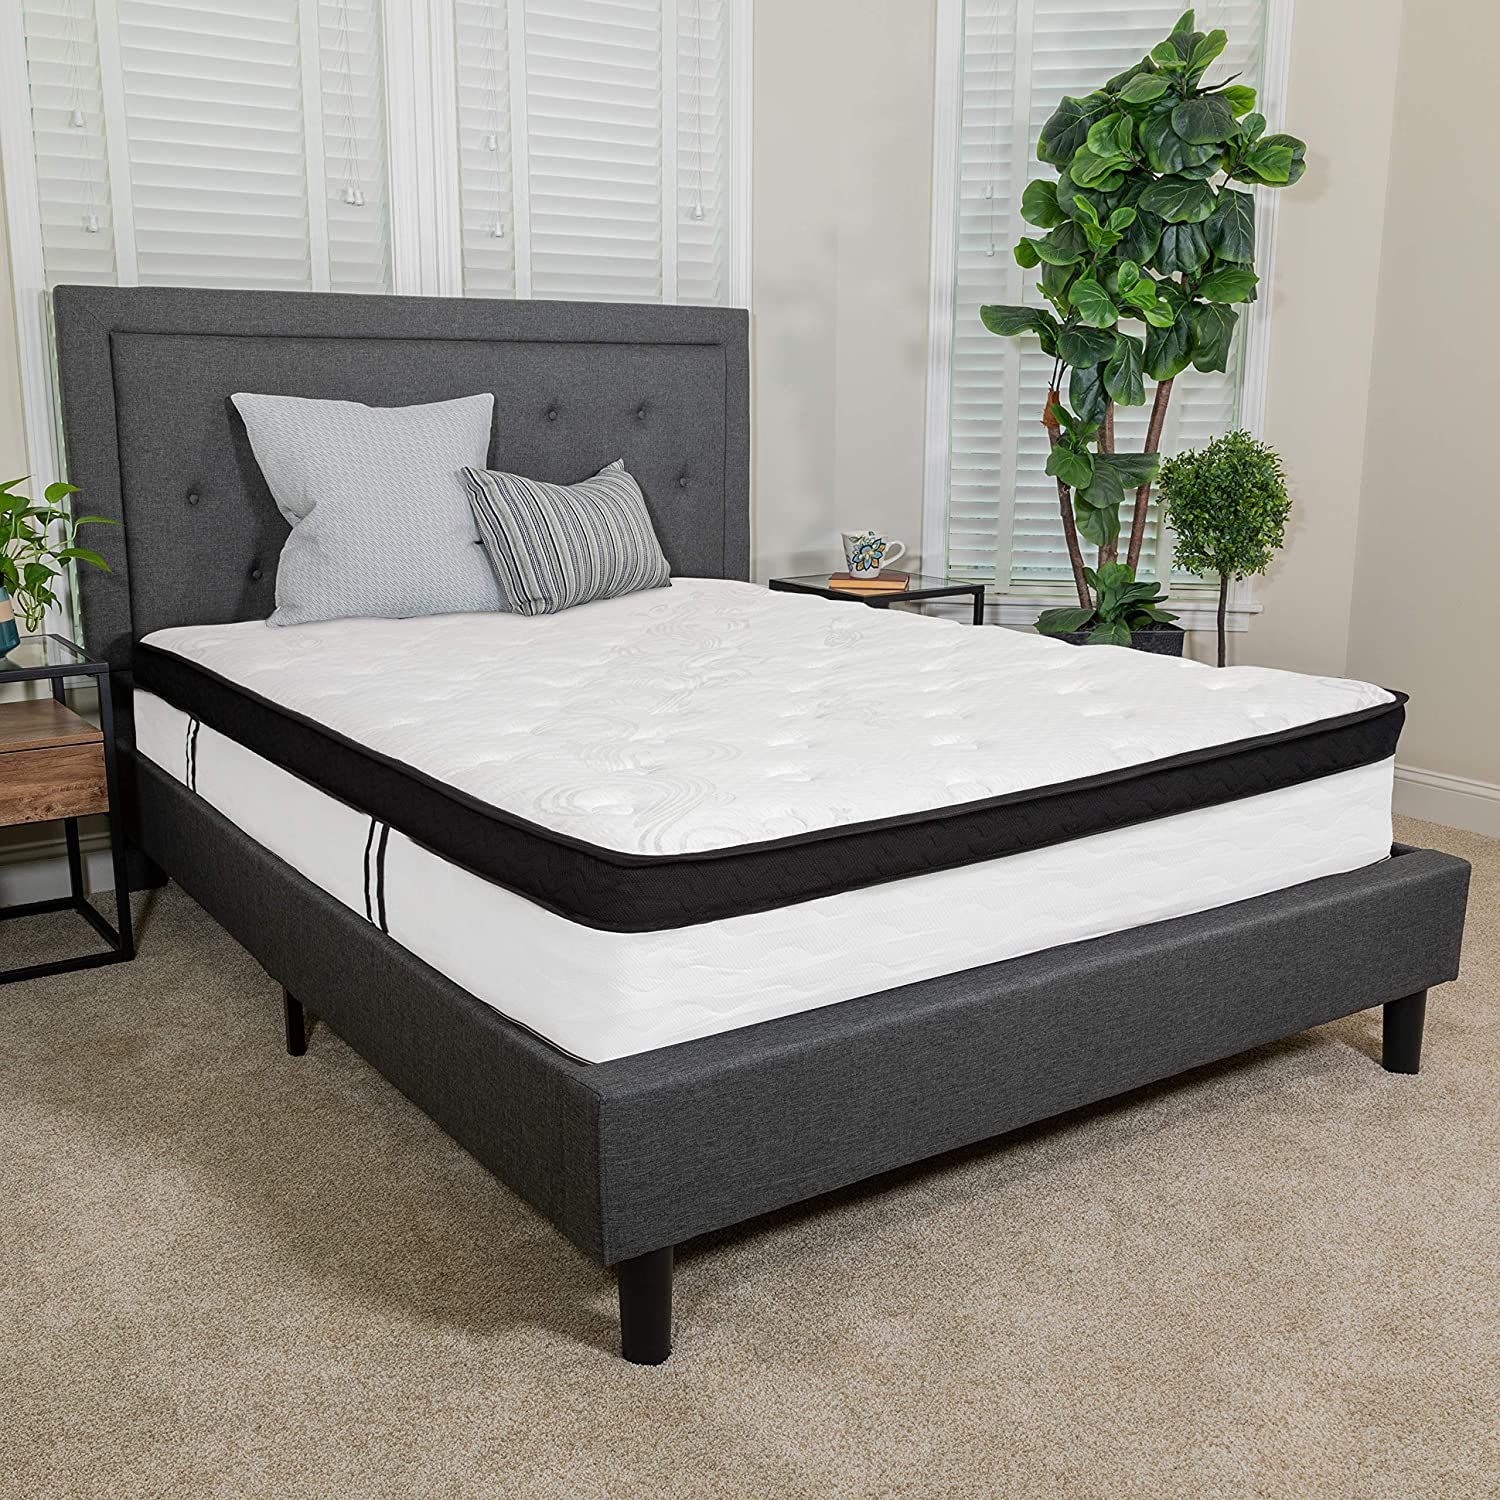 New Flash Furniture Capri Comfortable Sleep 12 Inch Memory Foam and Pocket Spring Mattress Queen size